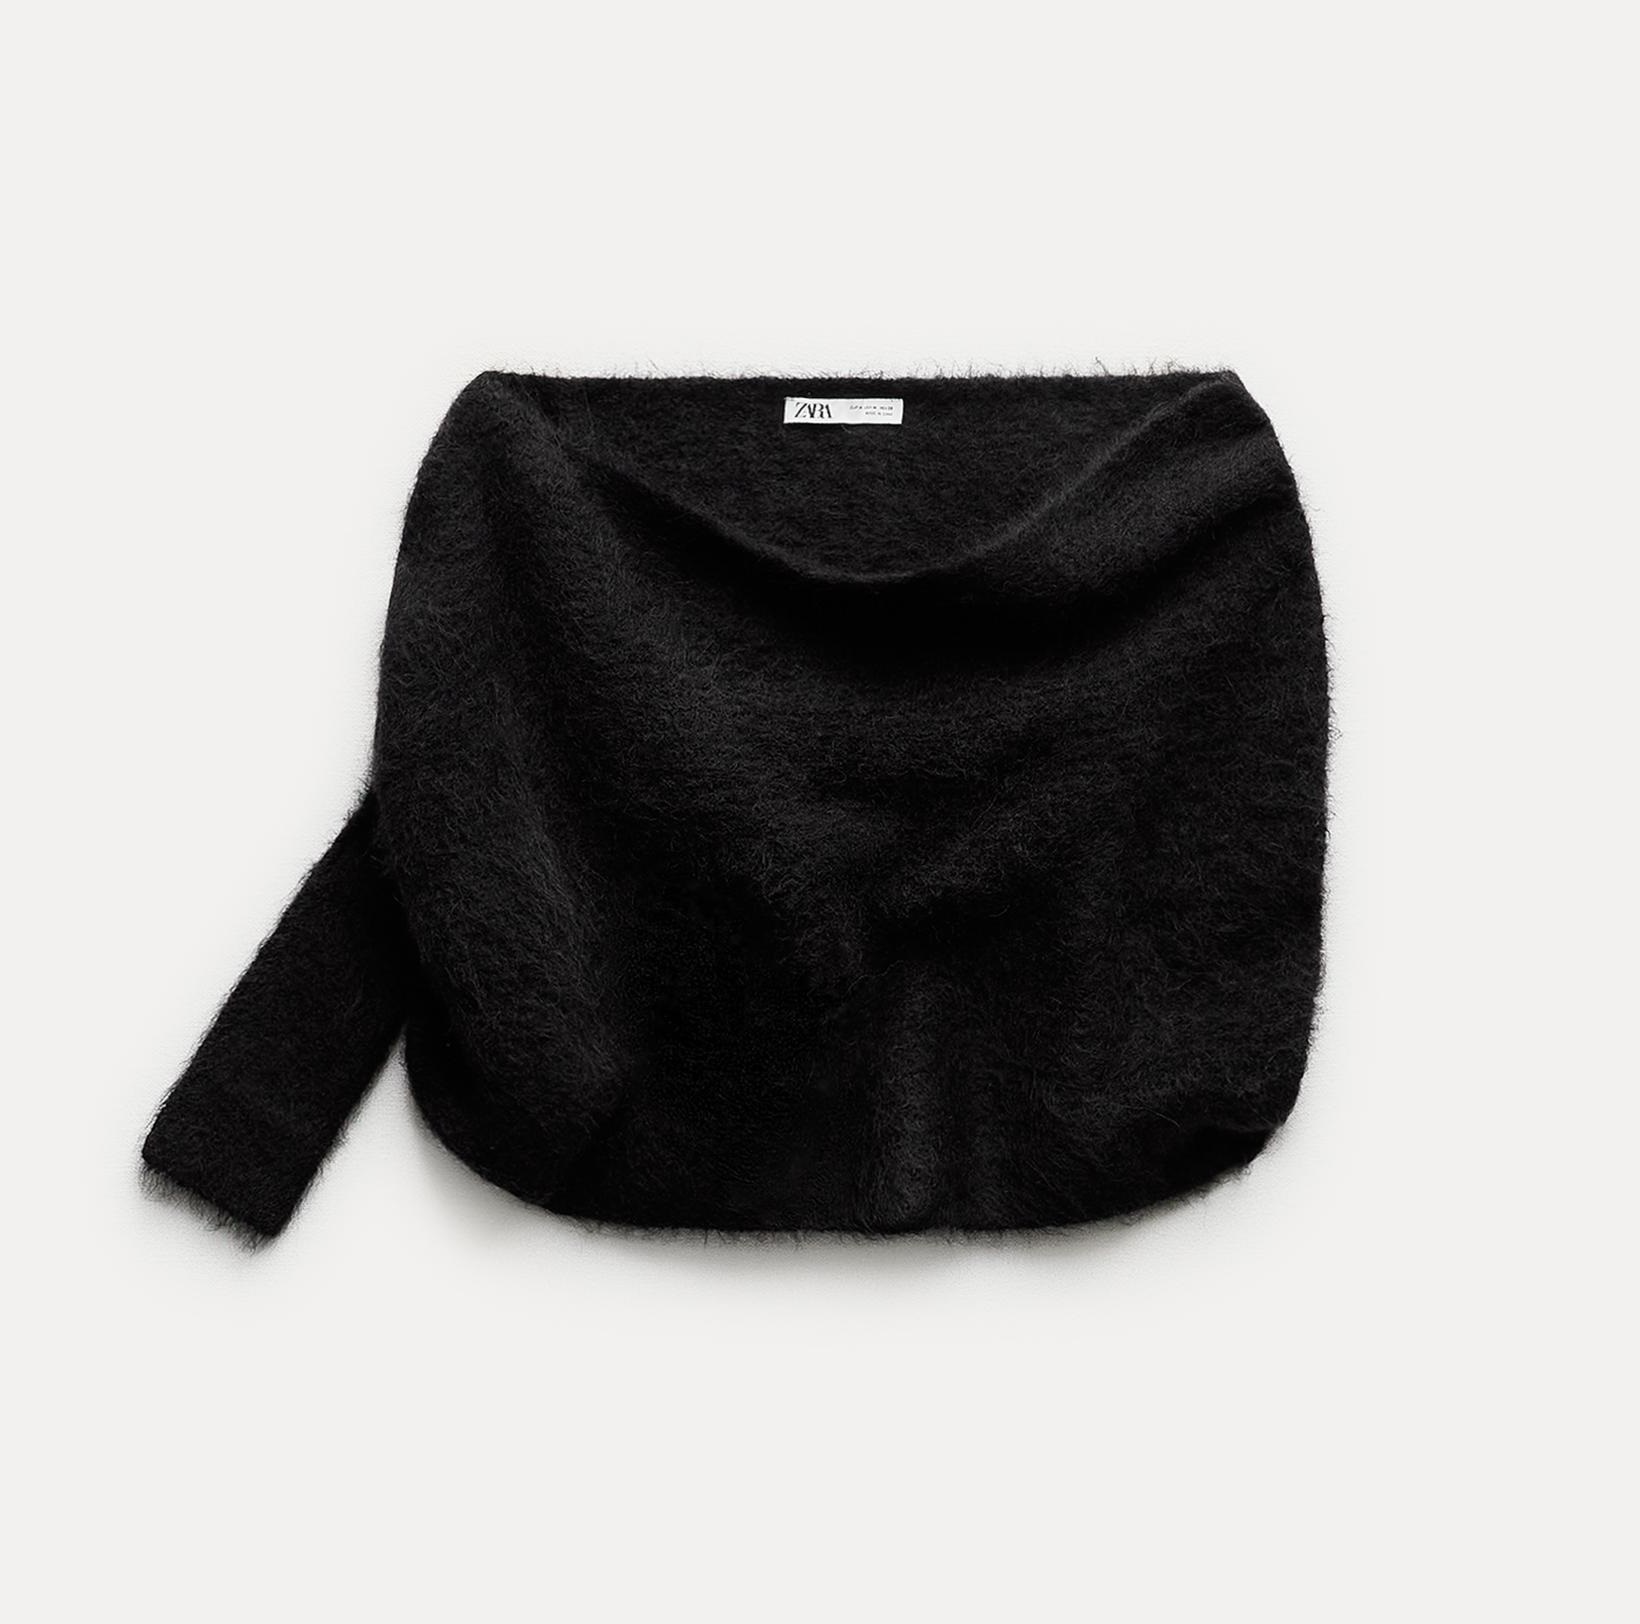 Джемпер Zara Alpaca Blend Asymmetric Knit Bolero Cape, черный топ zara asymmetric knit черный